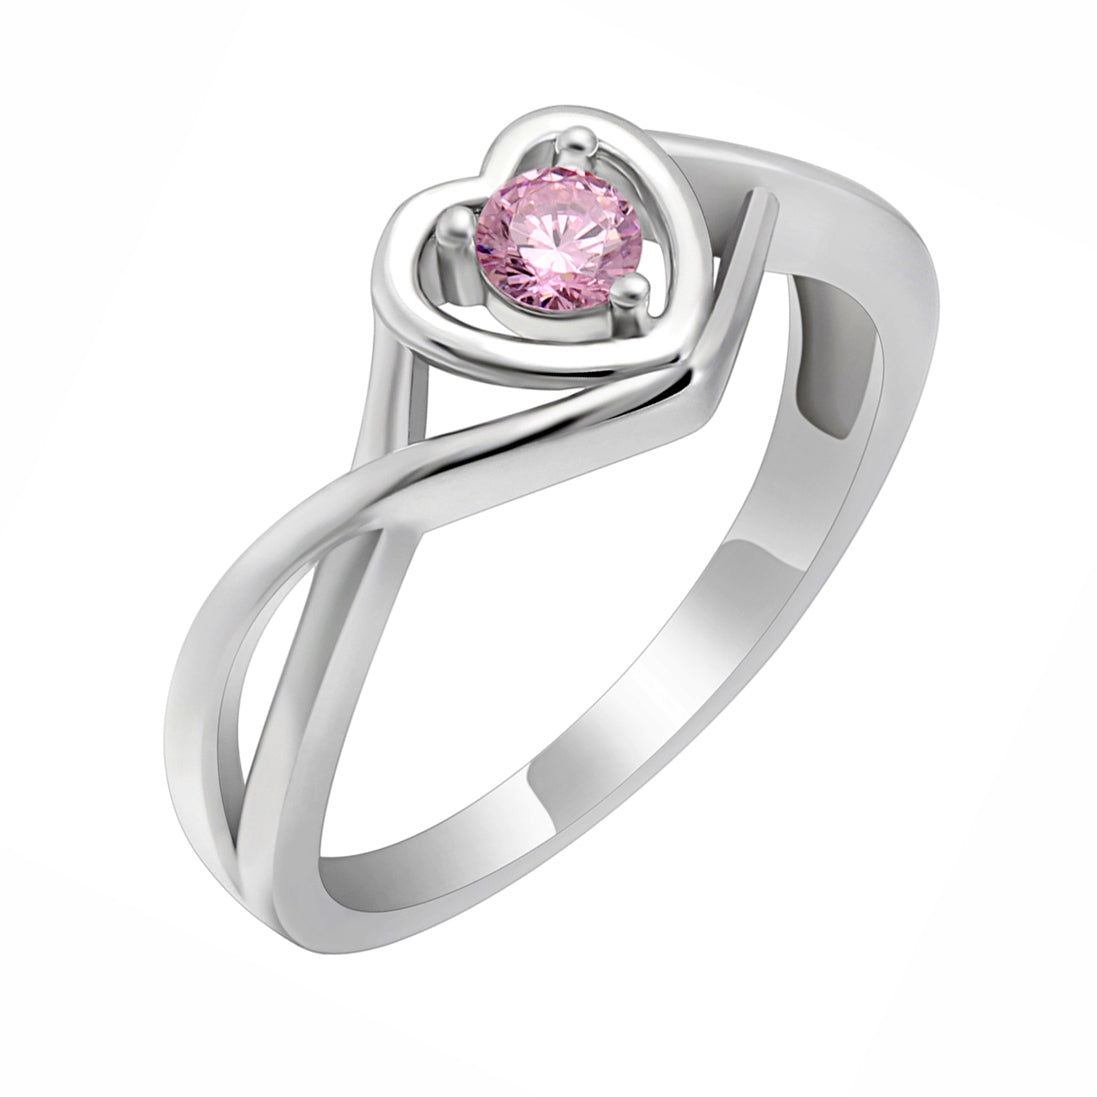 Christine Promise Ring Heart Engagement Women Silver Cz Ginger Lyne - October Pink,12